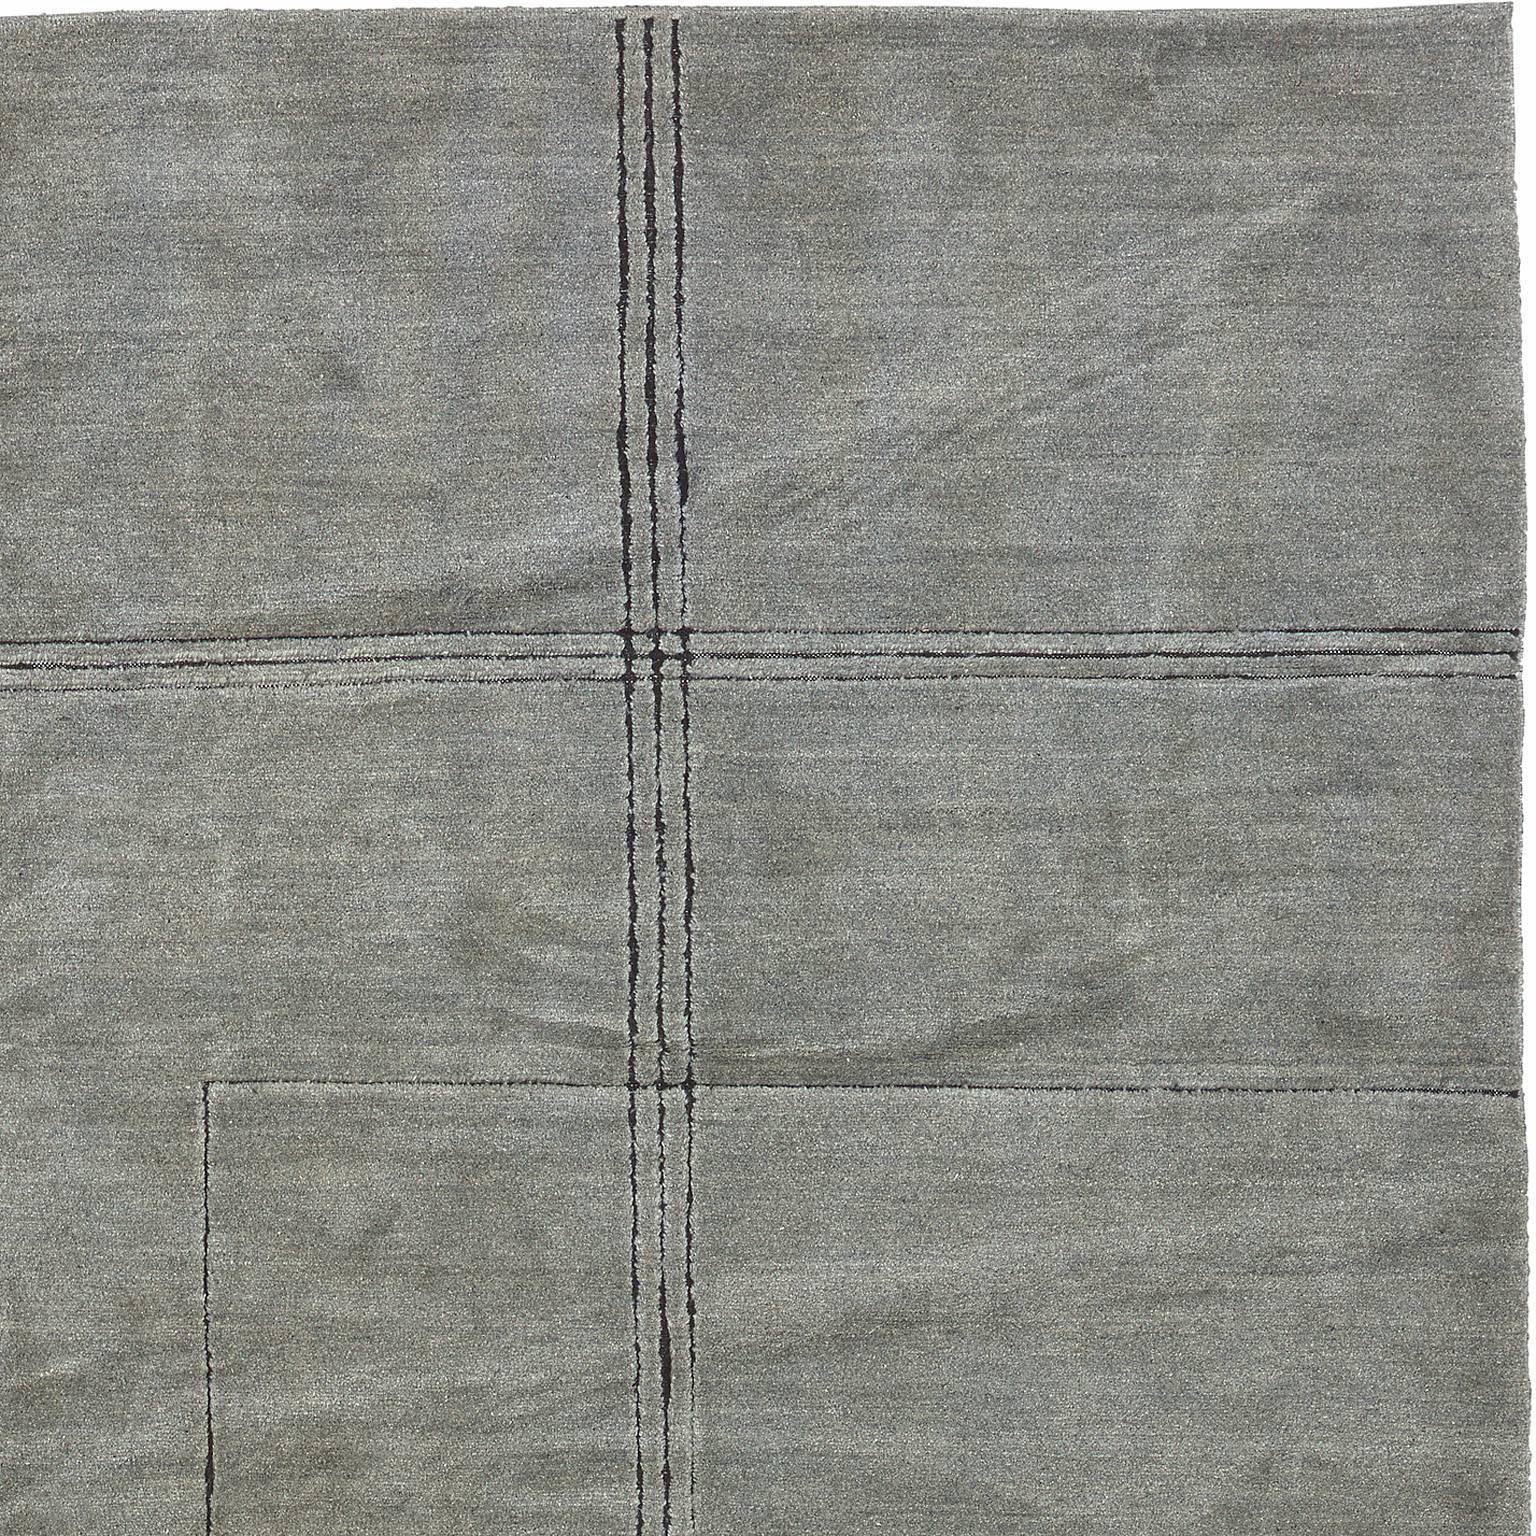 Contemporary 'Marion' Carpet
Grey or black lines.
